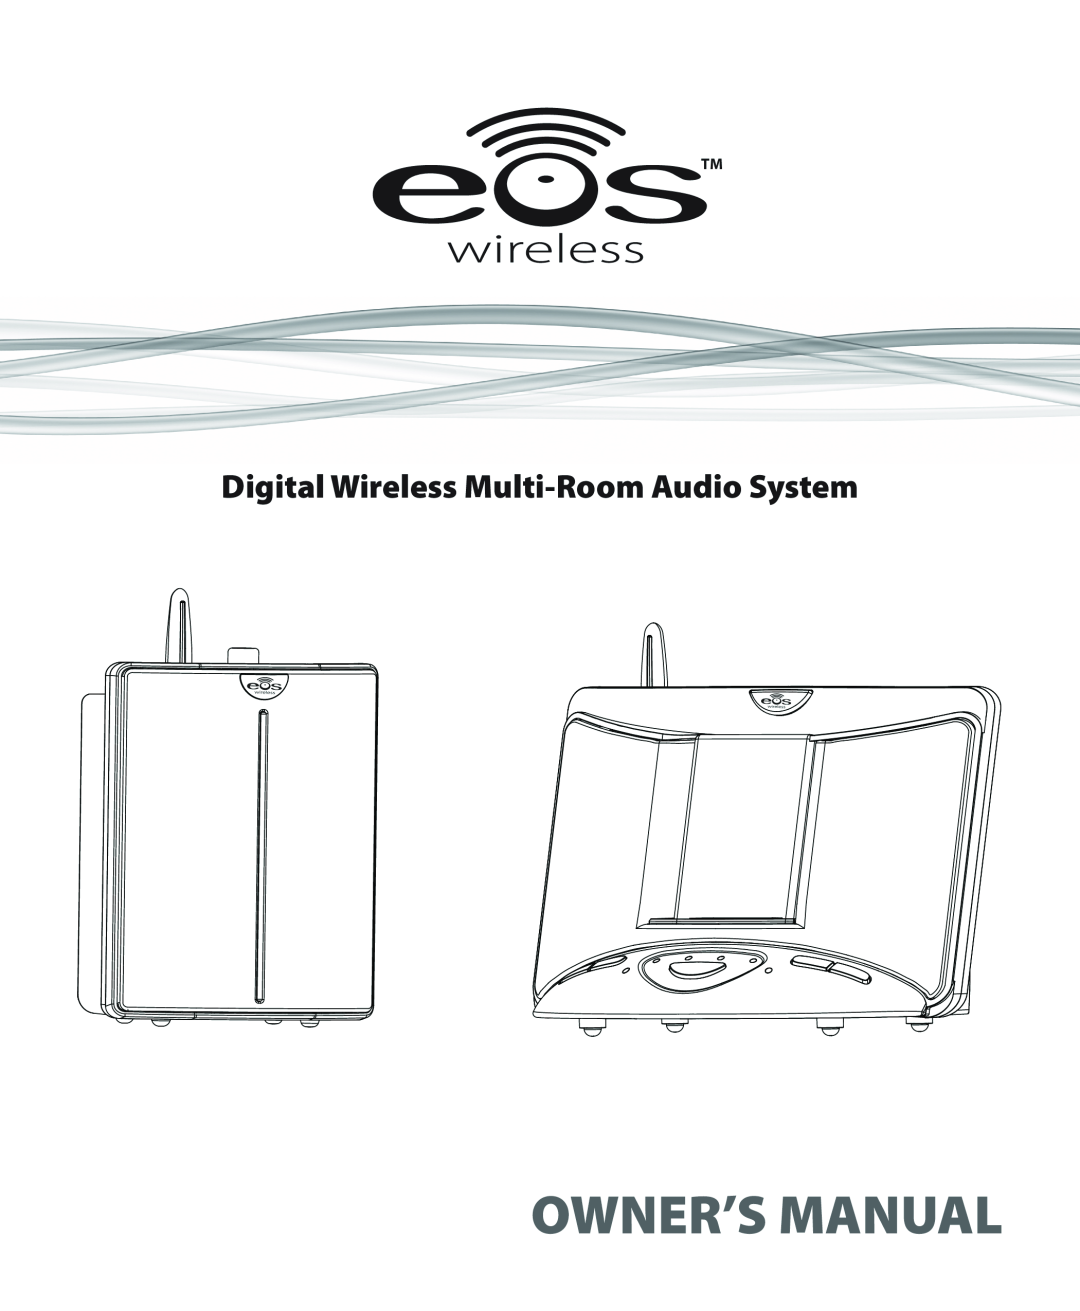 Eos Wireless Digital Wireless Multi-Room Audio System owner manual Digital Wireless Multi-RoomAudio System 